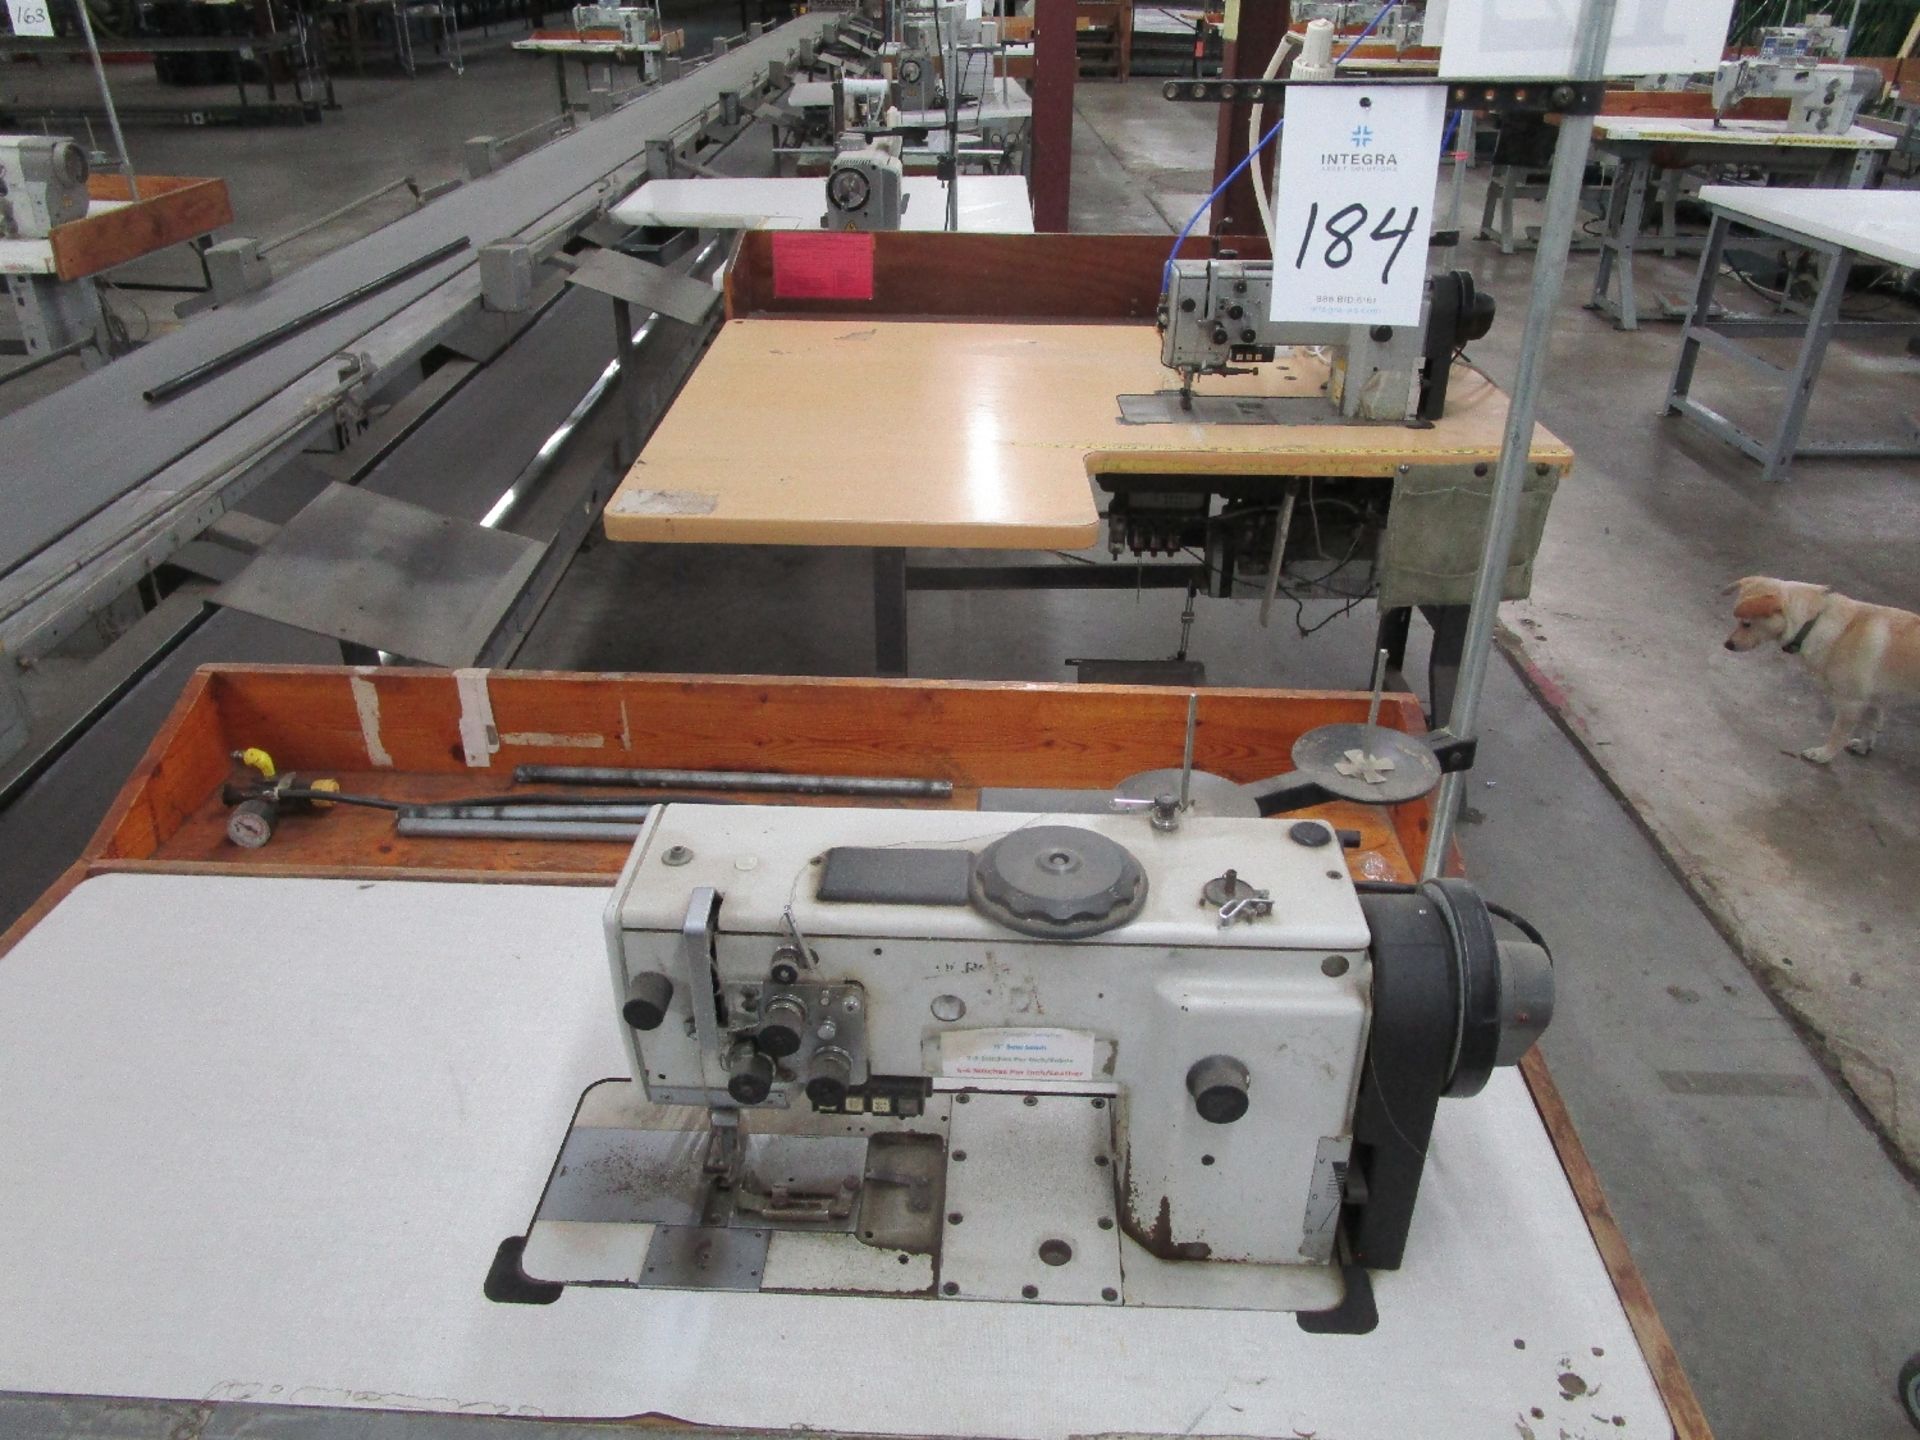 Durkopp Adler 067 990015 Programable Sewing Machine